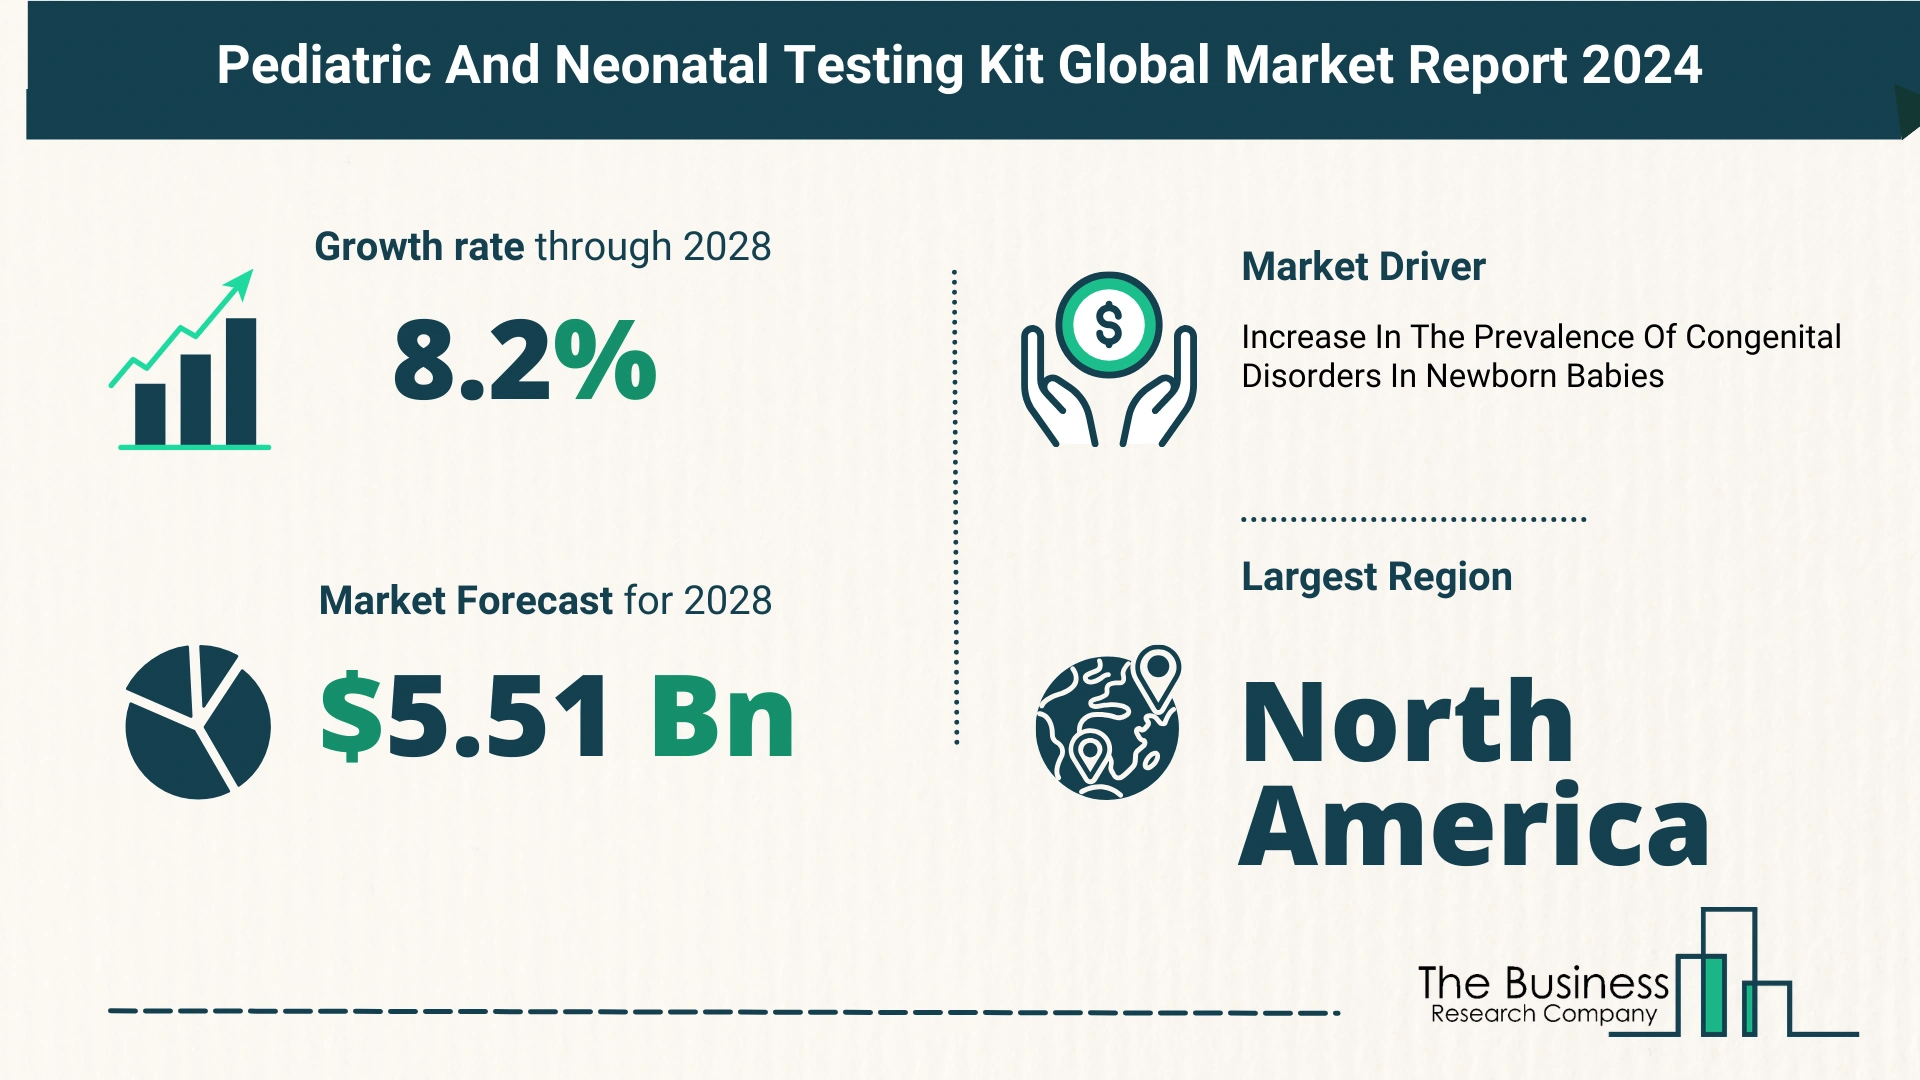 Global Pediatric And Neonatal Testing Kit Market